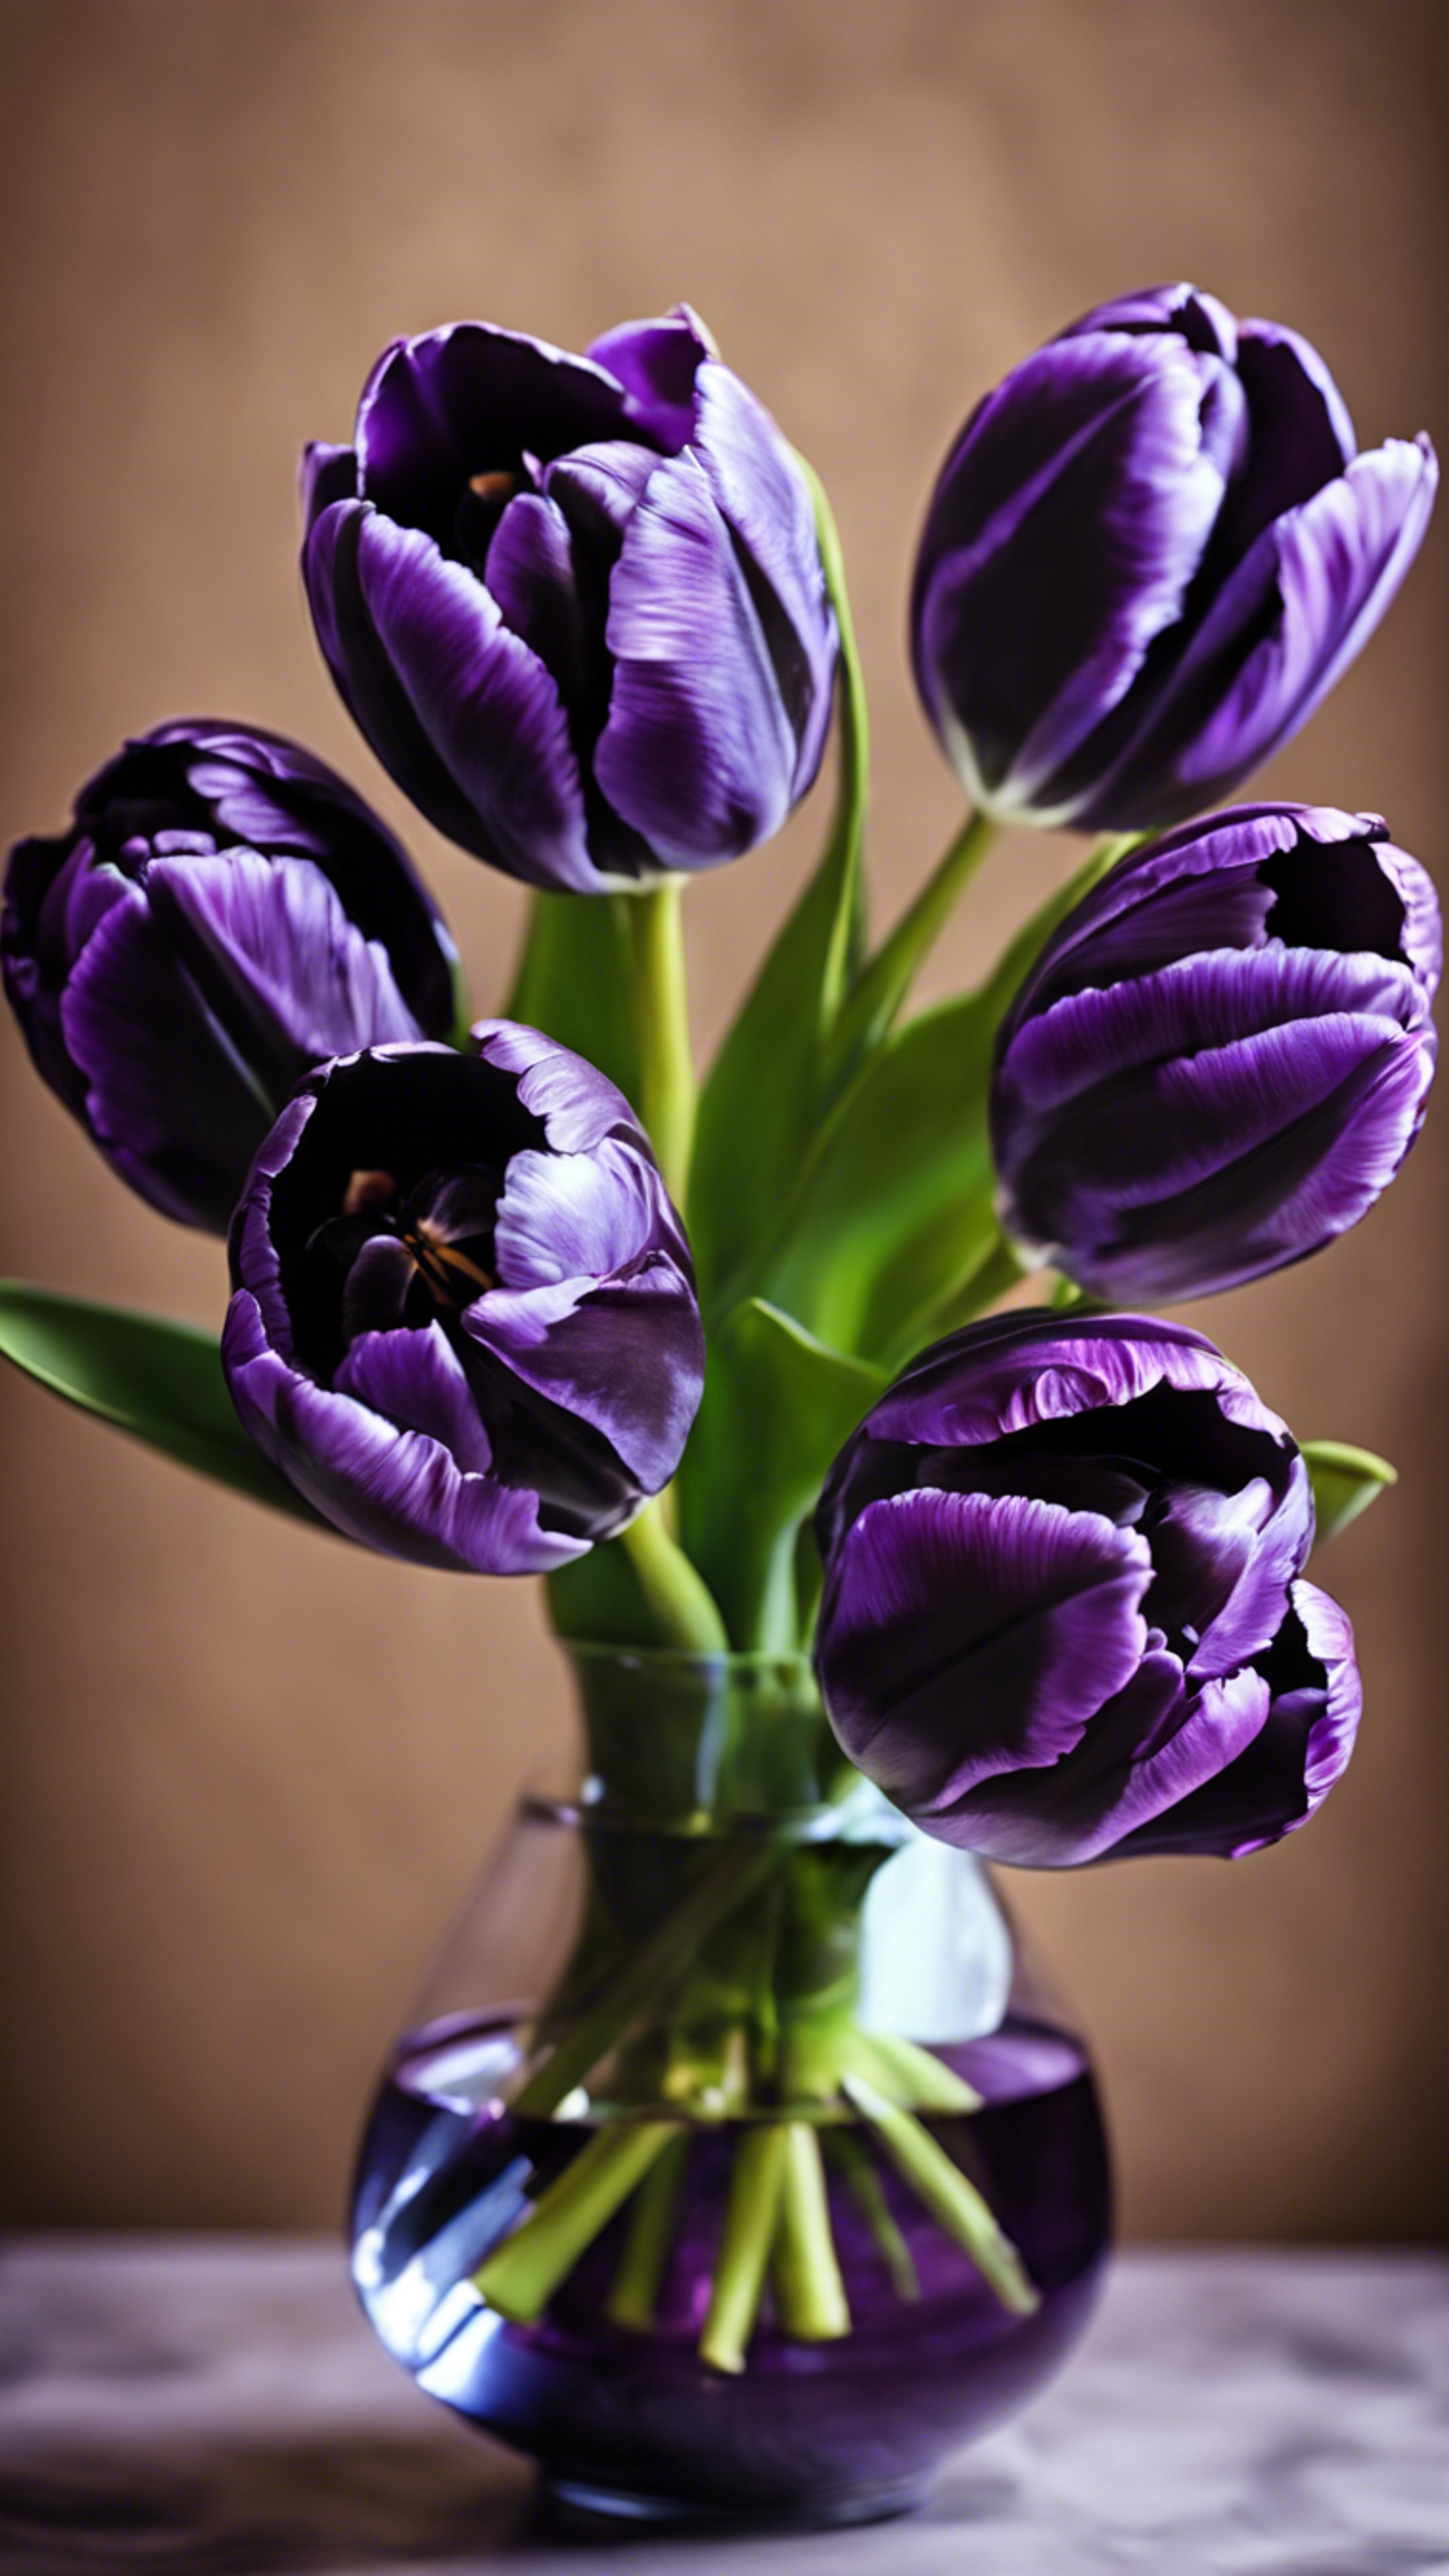 Black tulips with purple edges in full bloom in an elegant vase.壁紙[bf30bf151b944cb69afa]